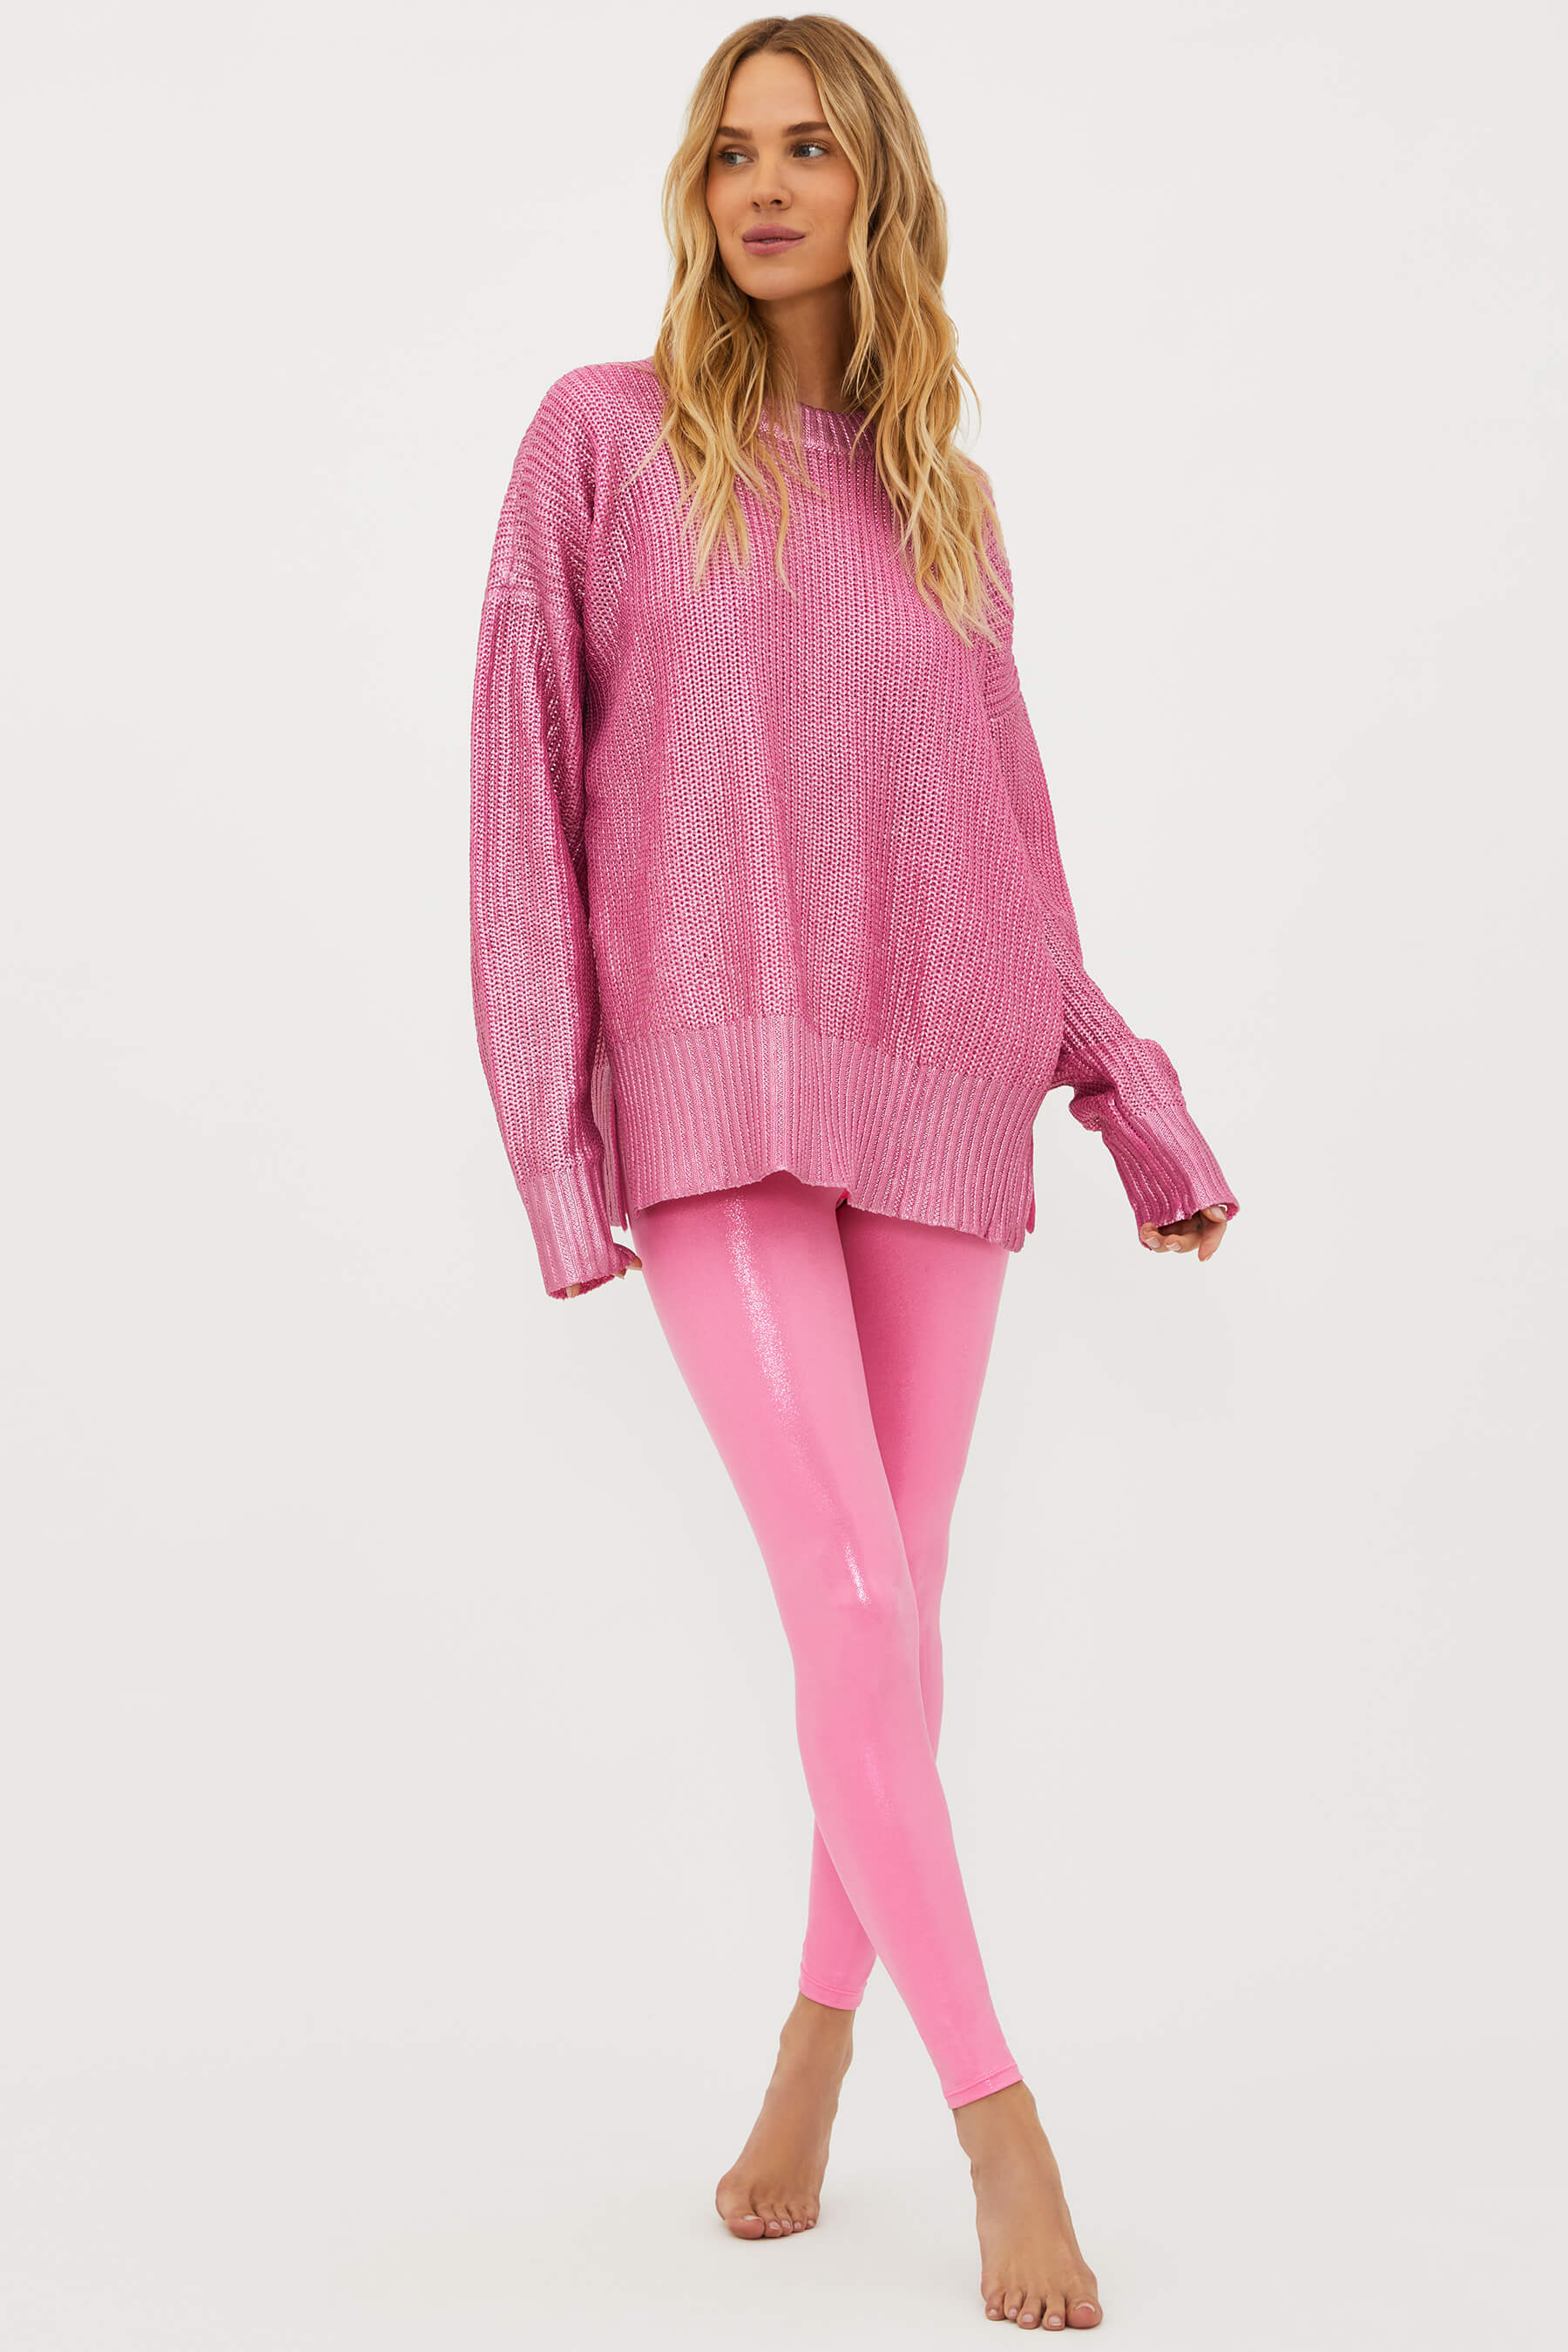 Piper Legging Pink Shimmer